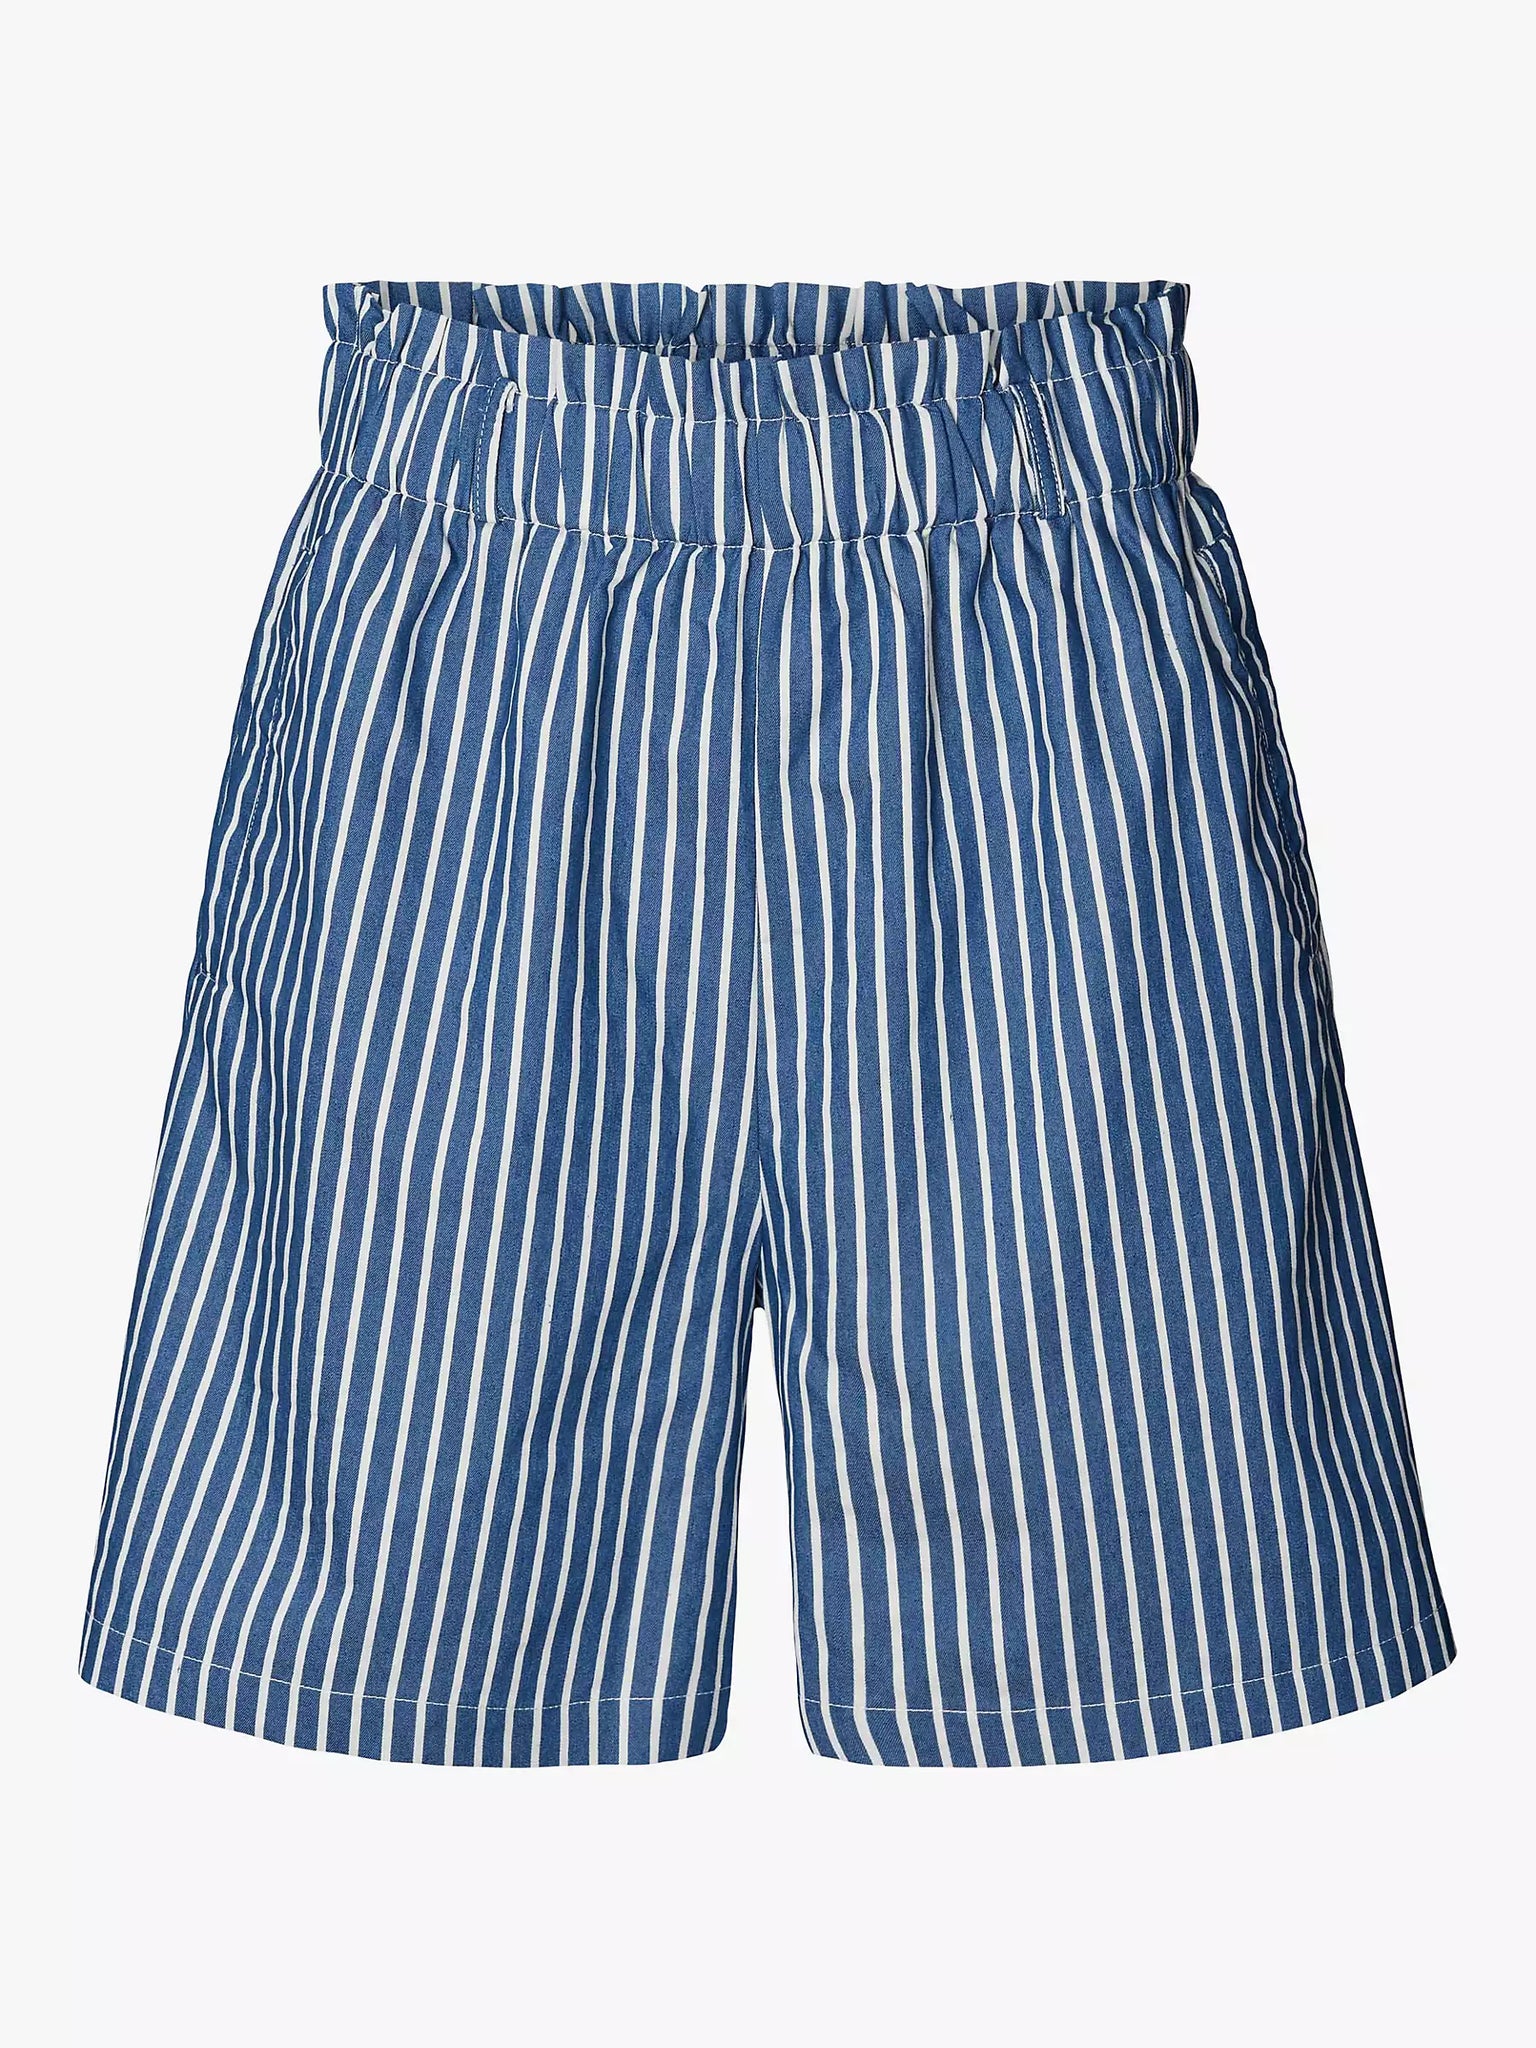 Lollys Laundry Blanca Shorts - Stripe LUCKY LAST XS